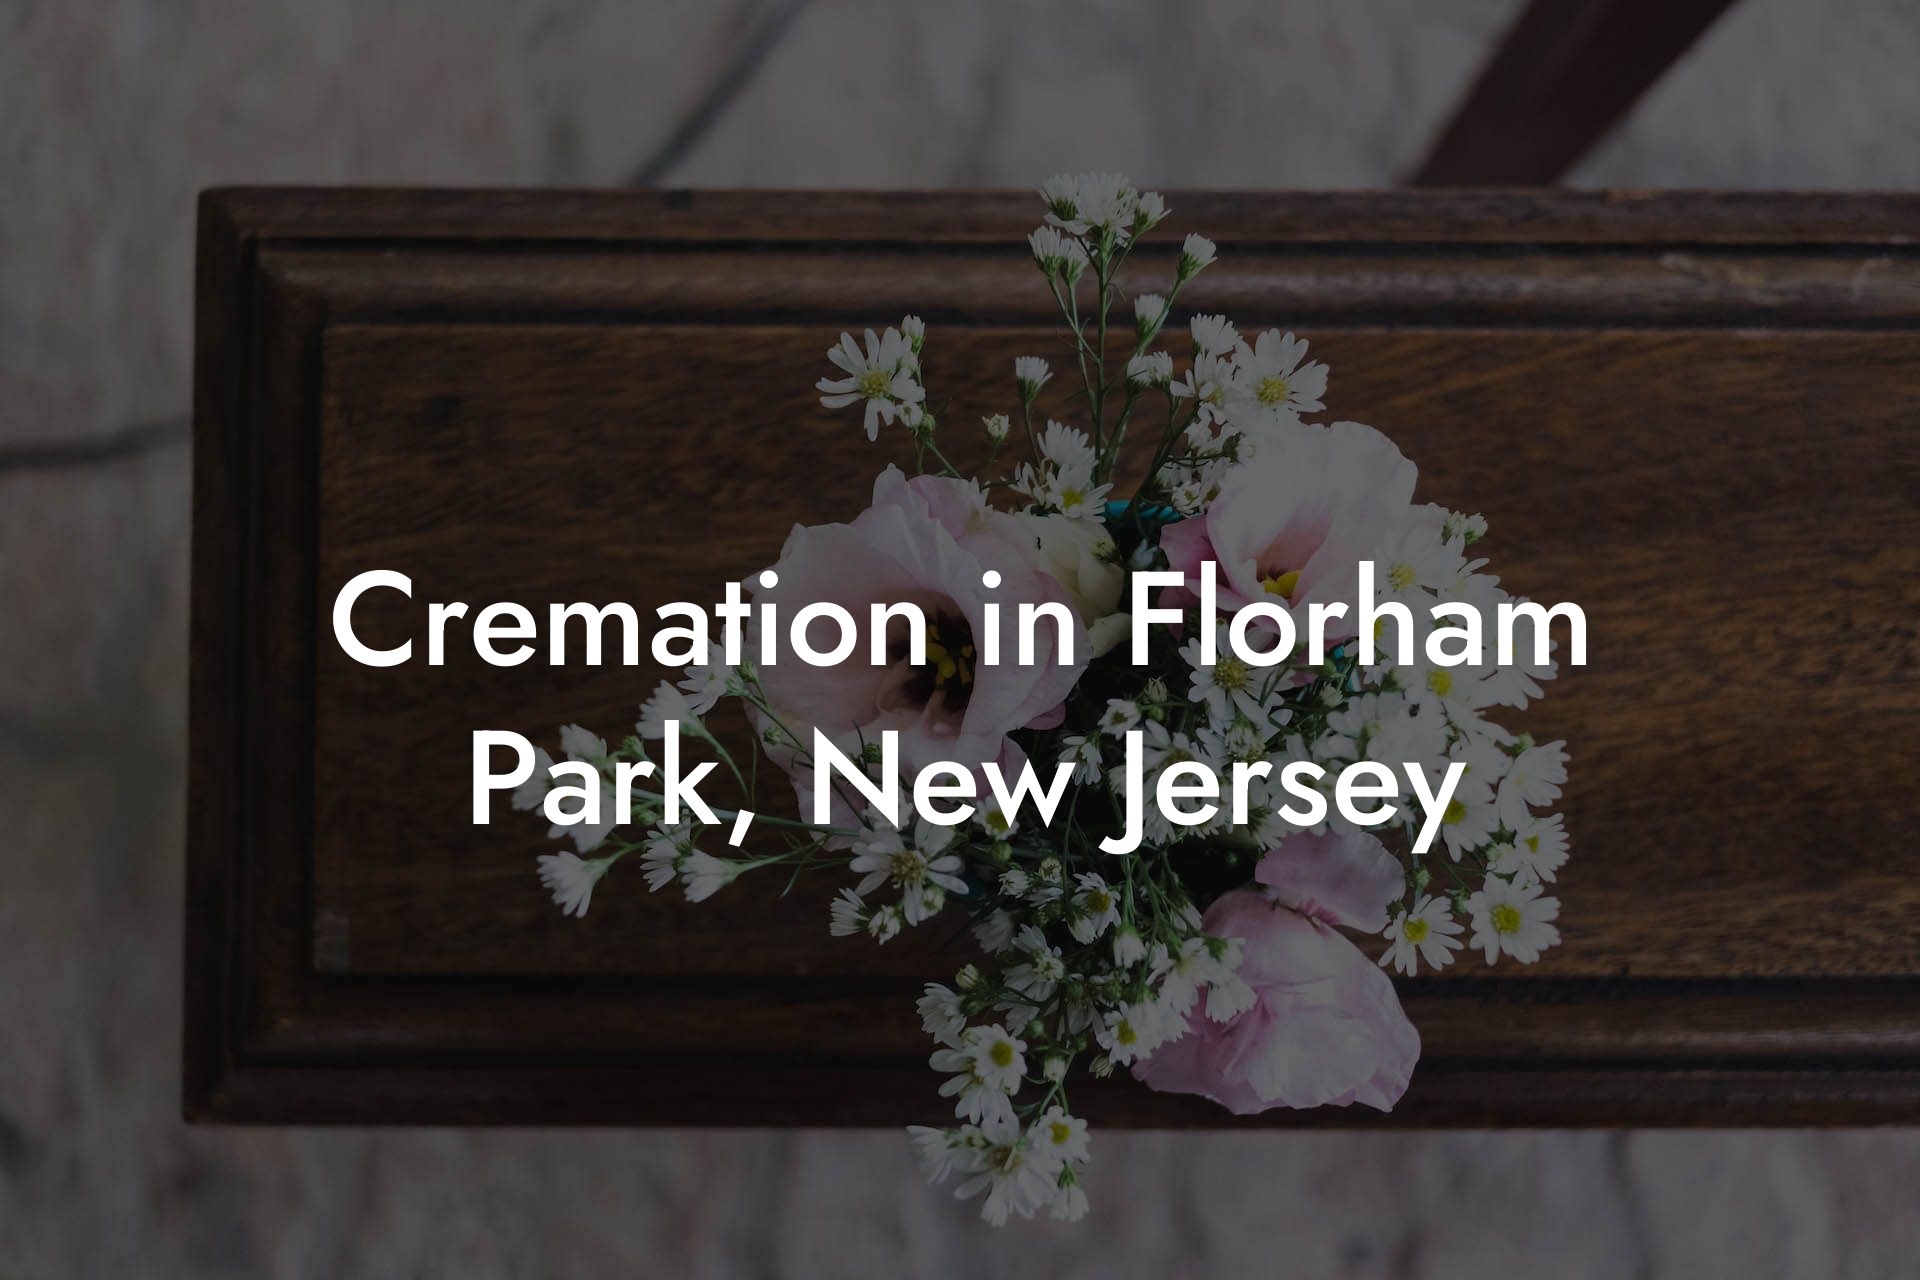 Cremation in Florham Park, New Jersey